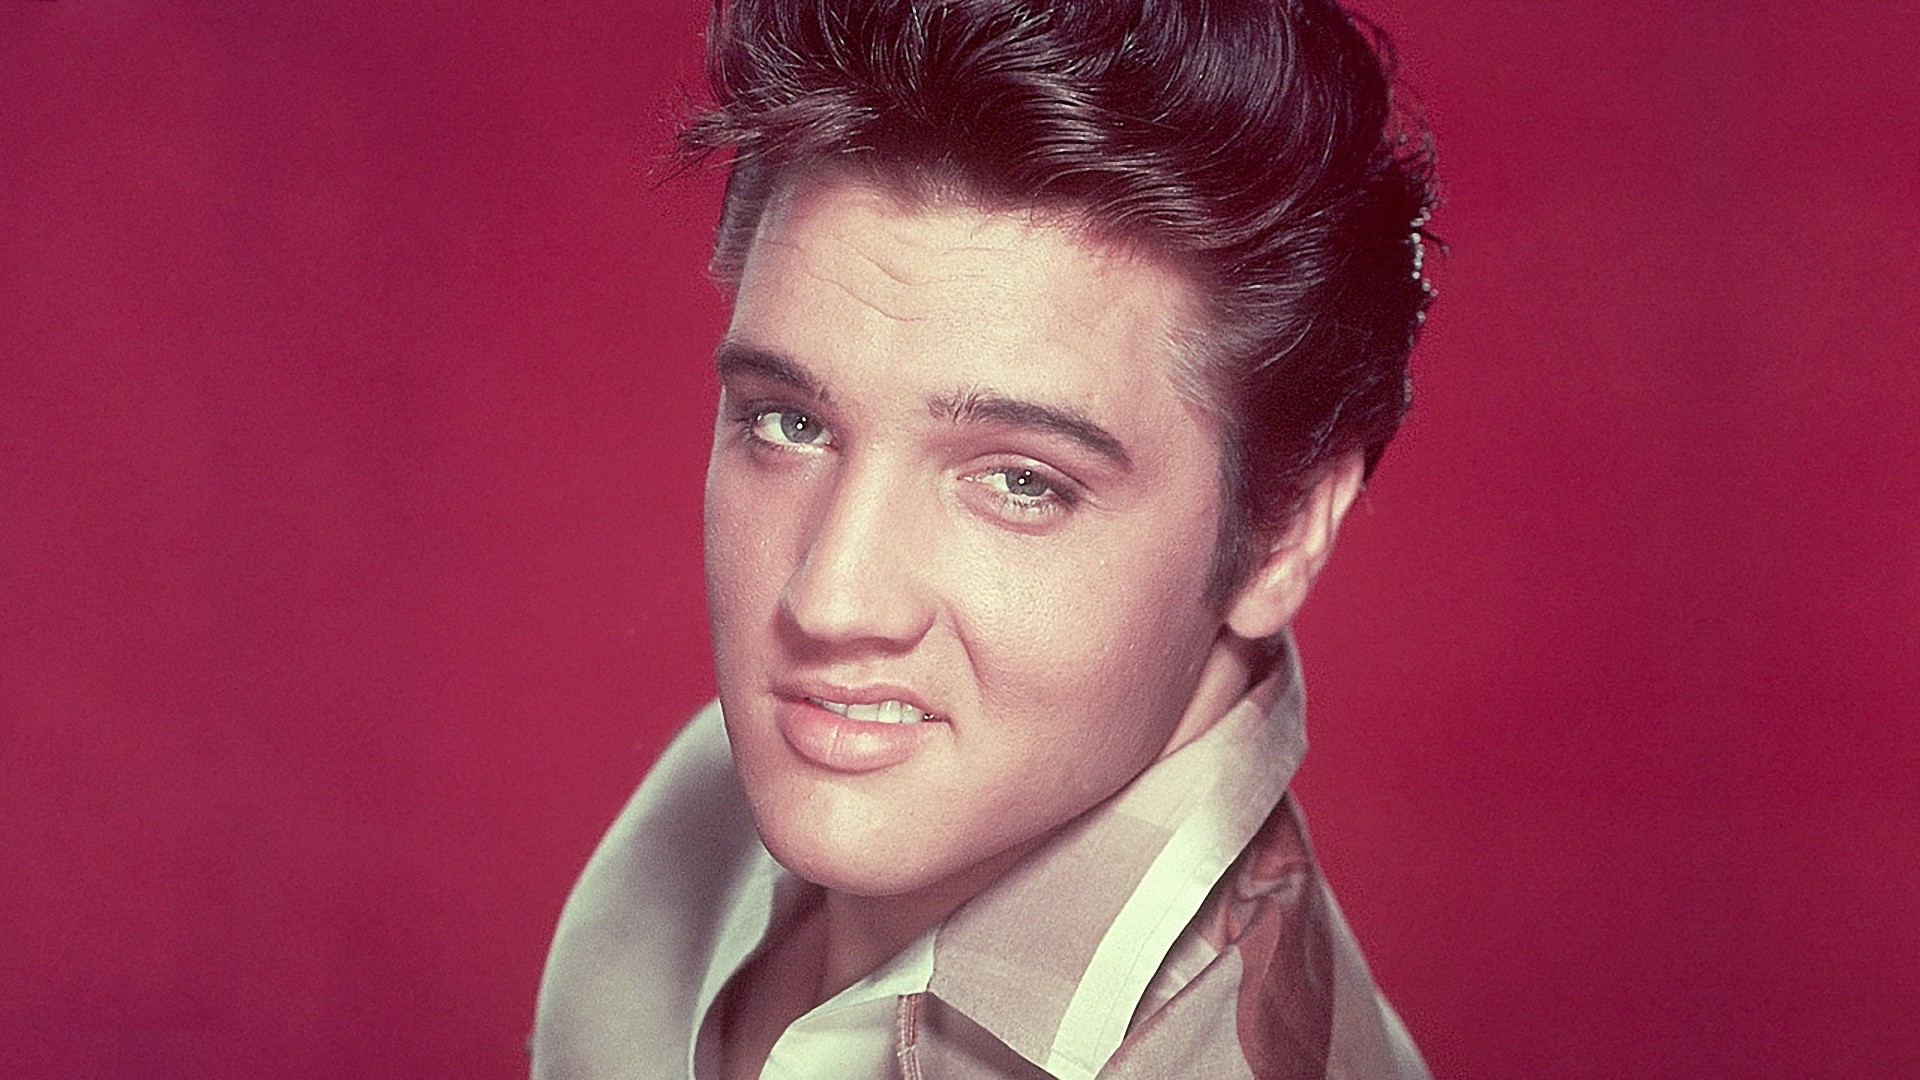 1920x1080 Elvis Presley Full HD Wallpaper 